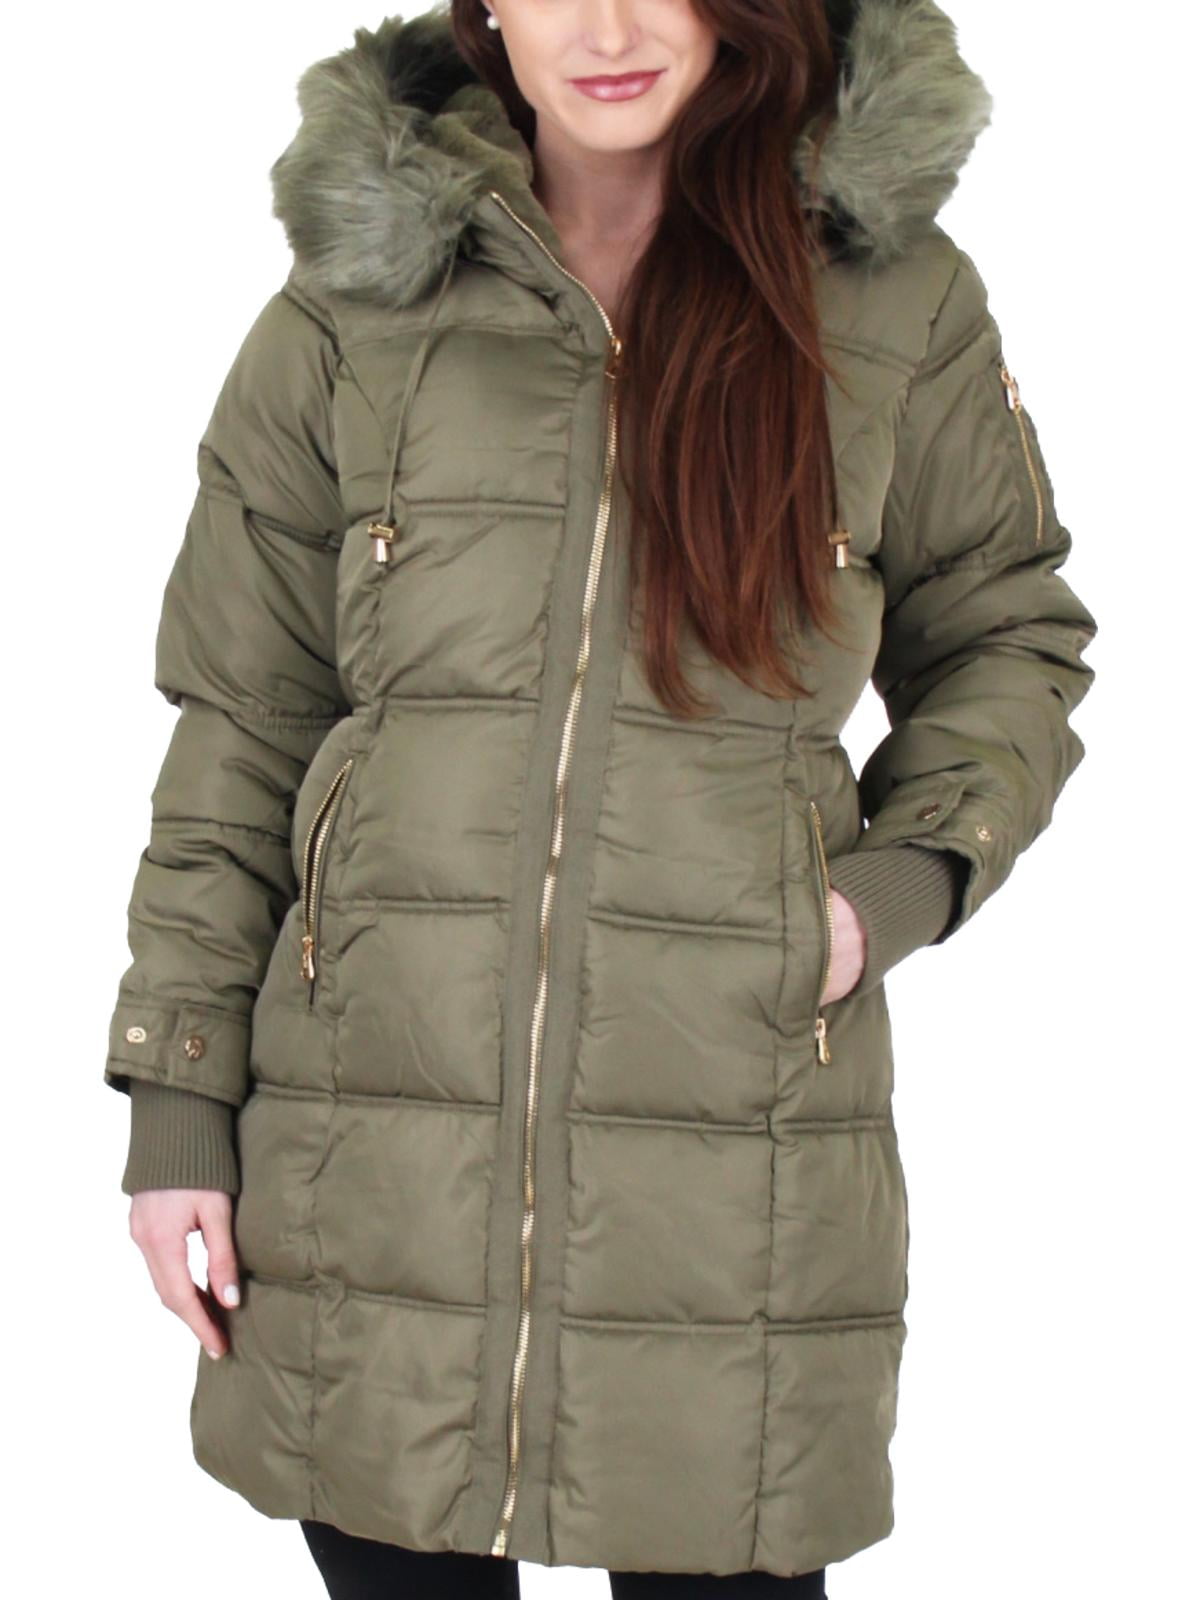 Jessica Simpson - Jessica Simpson Womens Faux Fur Winter Puffer Coat ...